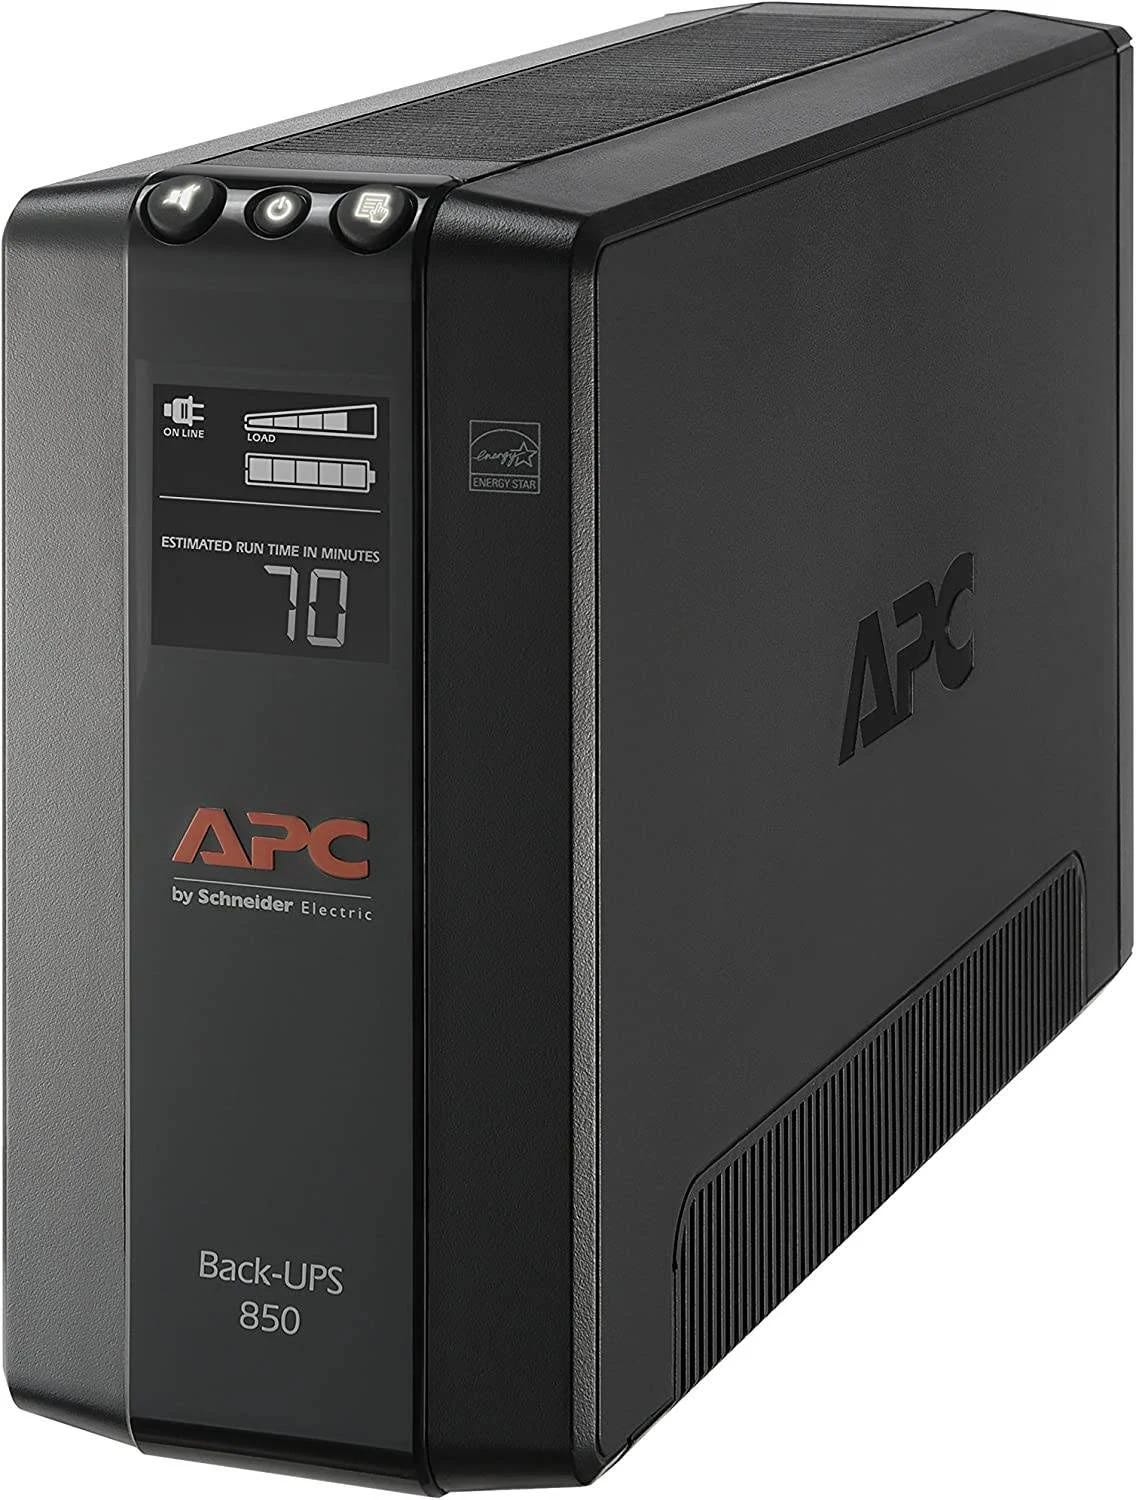 APC Back-UPS Pro 850VA Battery Back-Up System - Portable Surge Protector for Electronics | Image